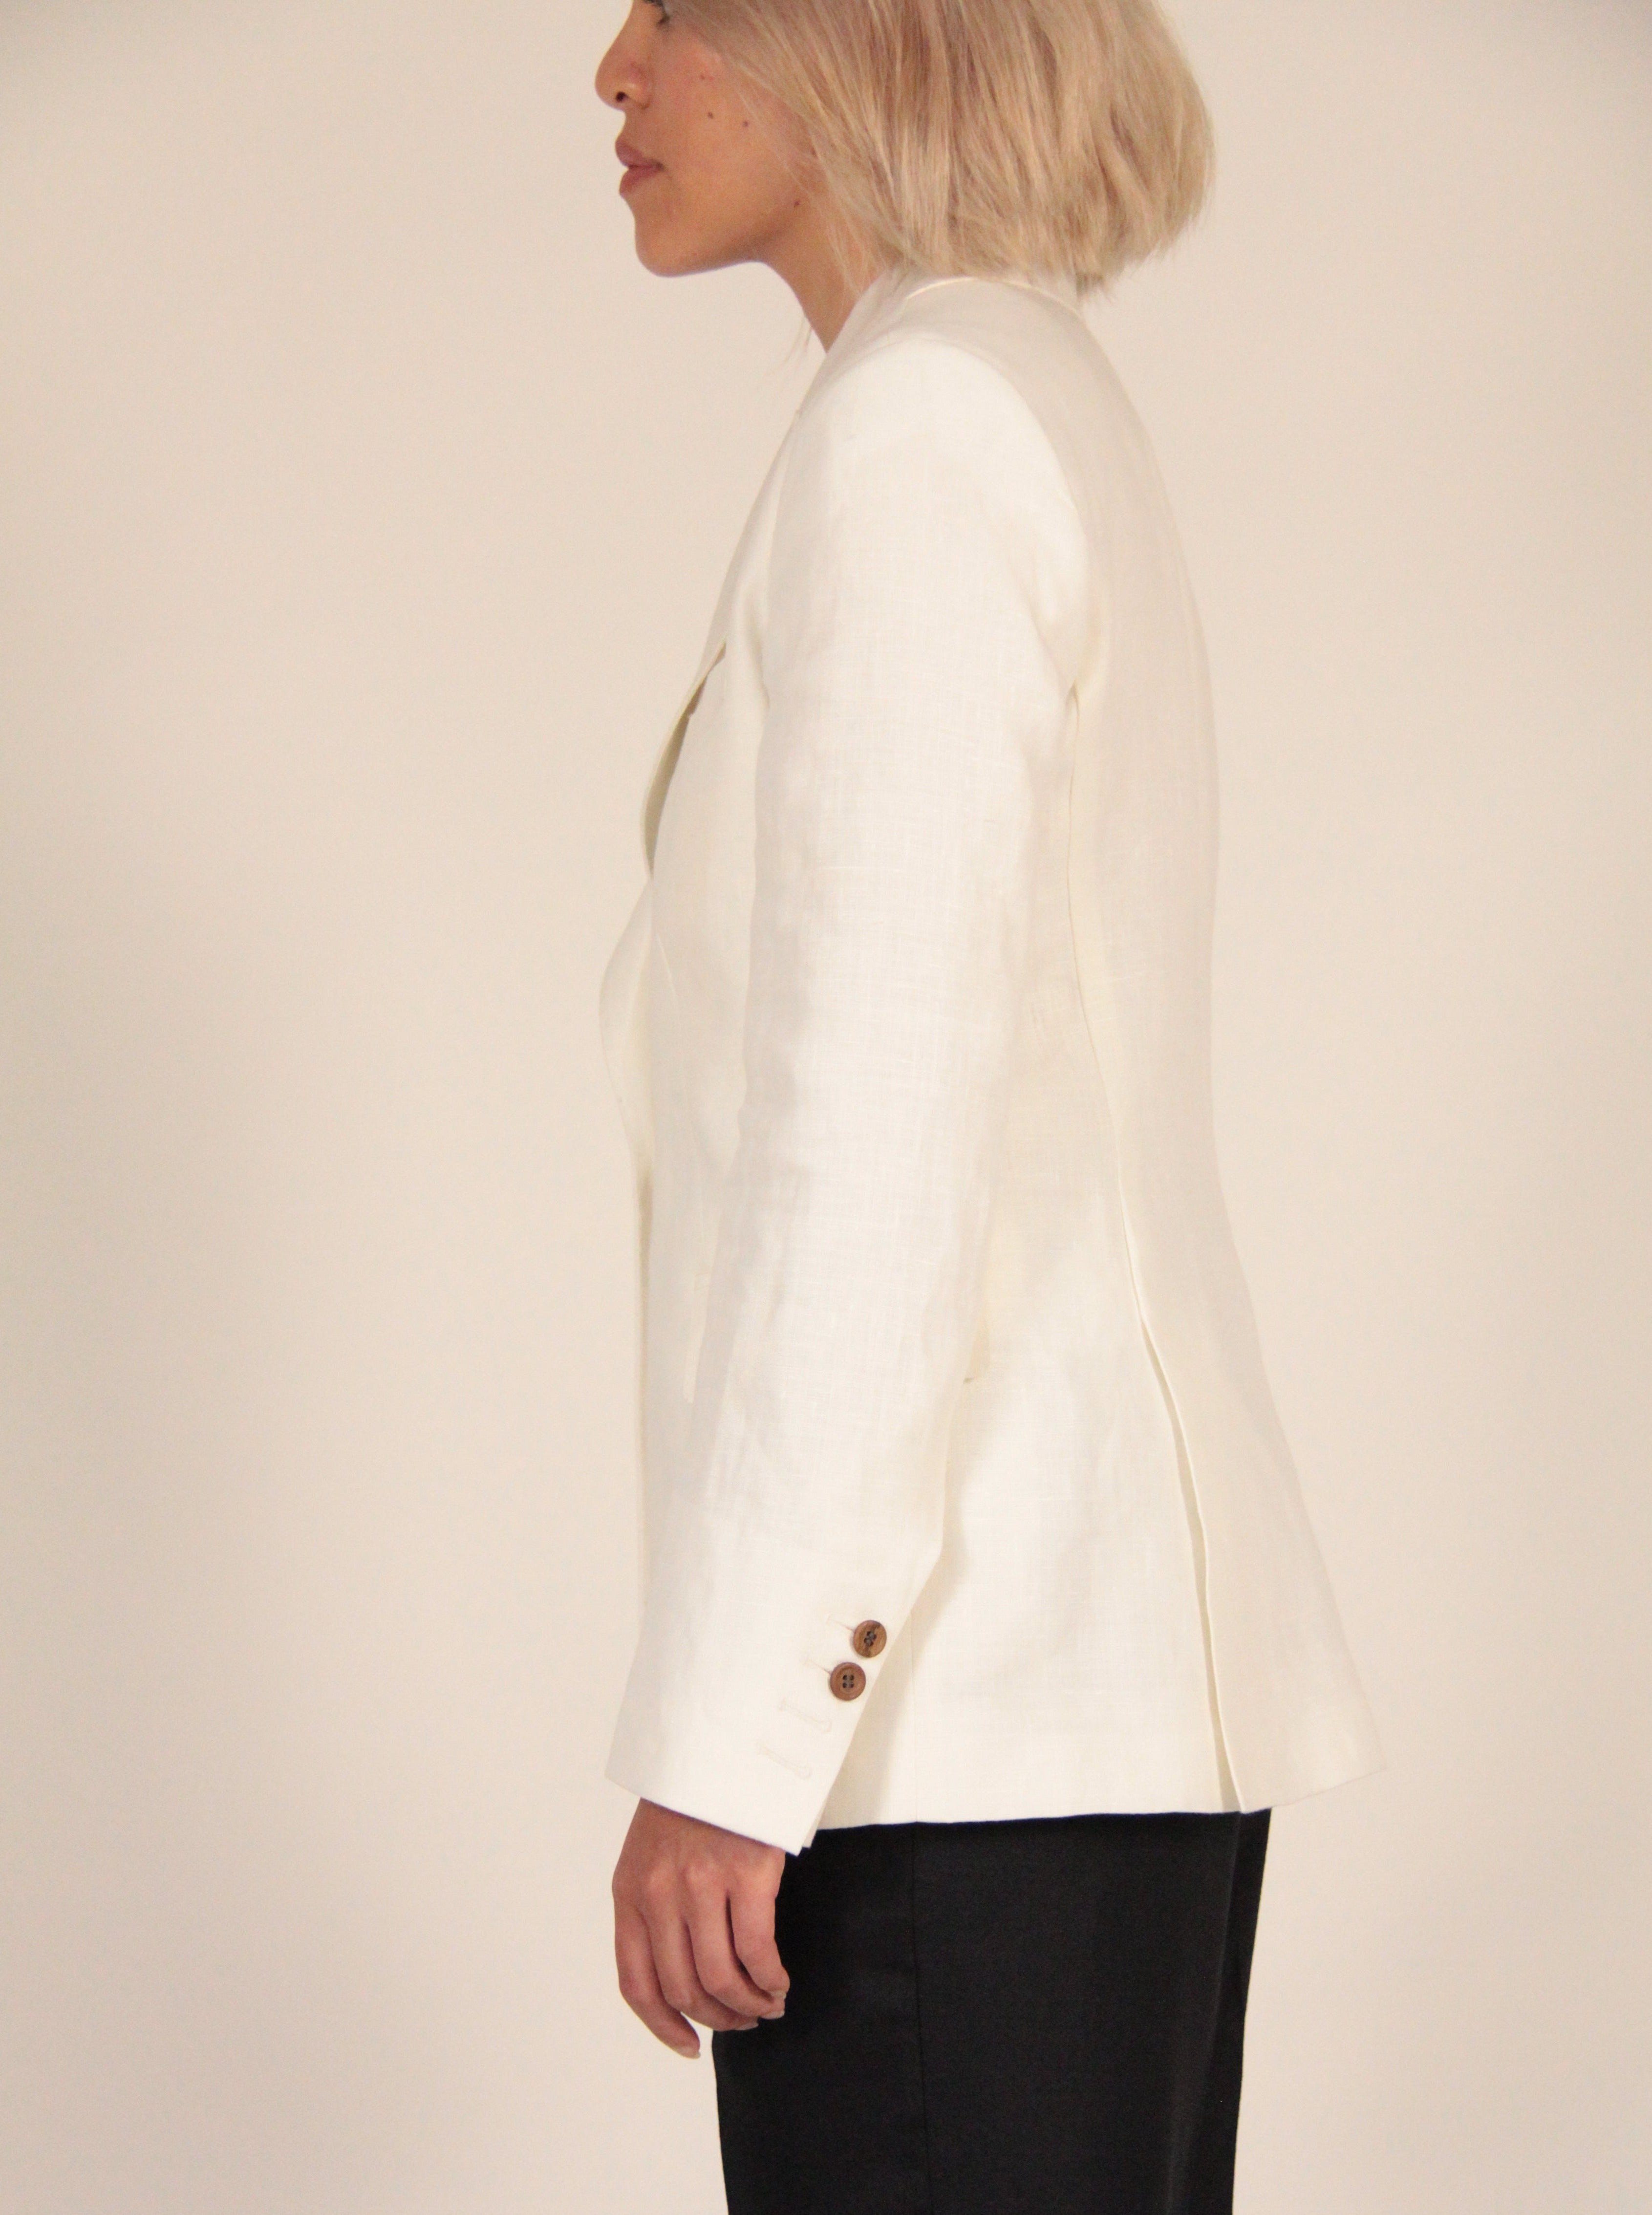 White linen single-breasted peak lapel blazer